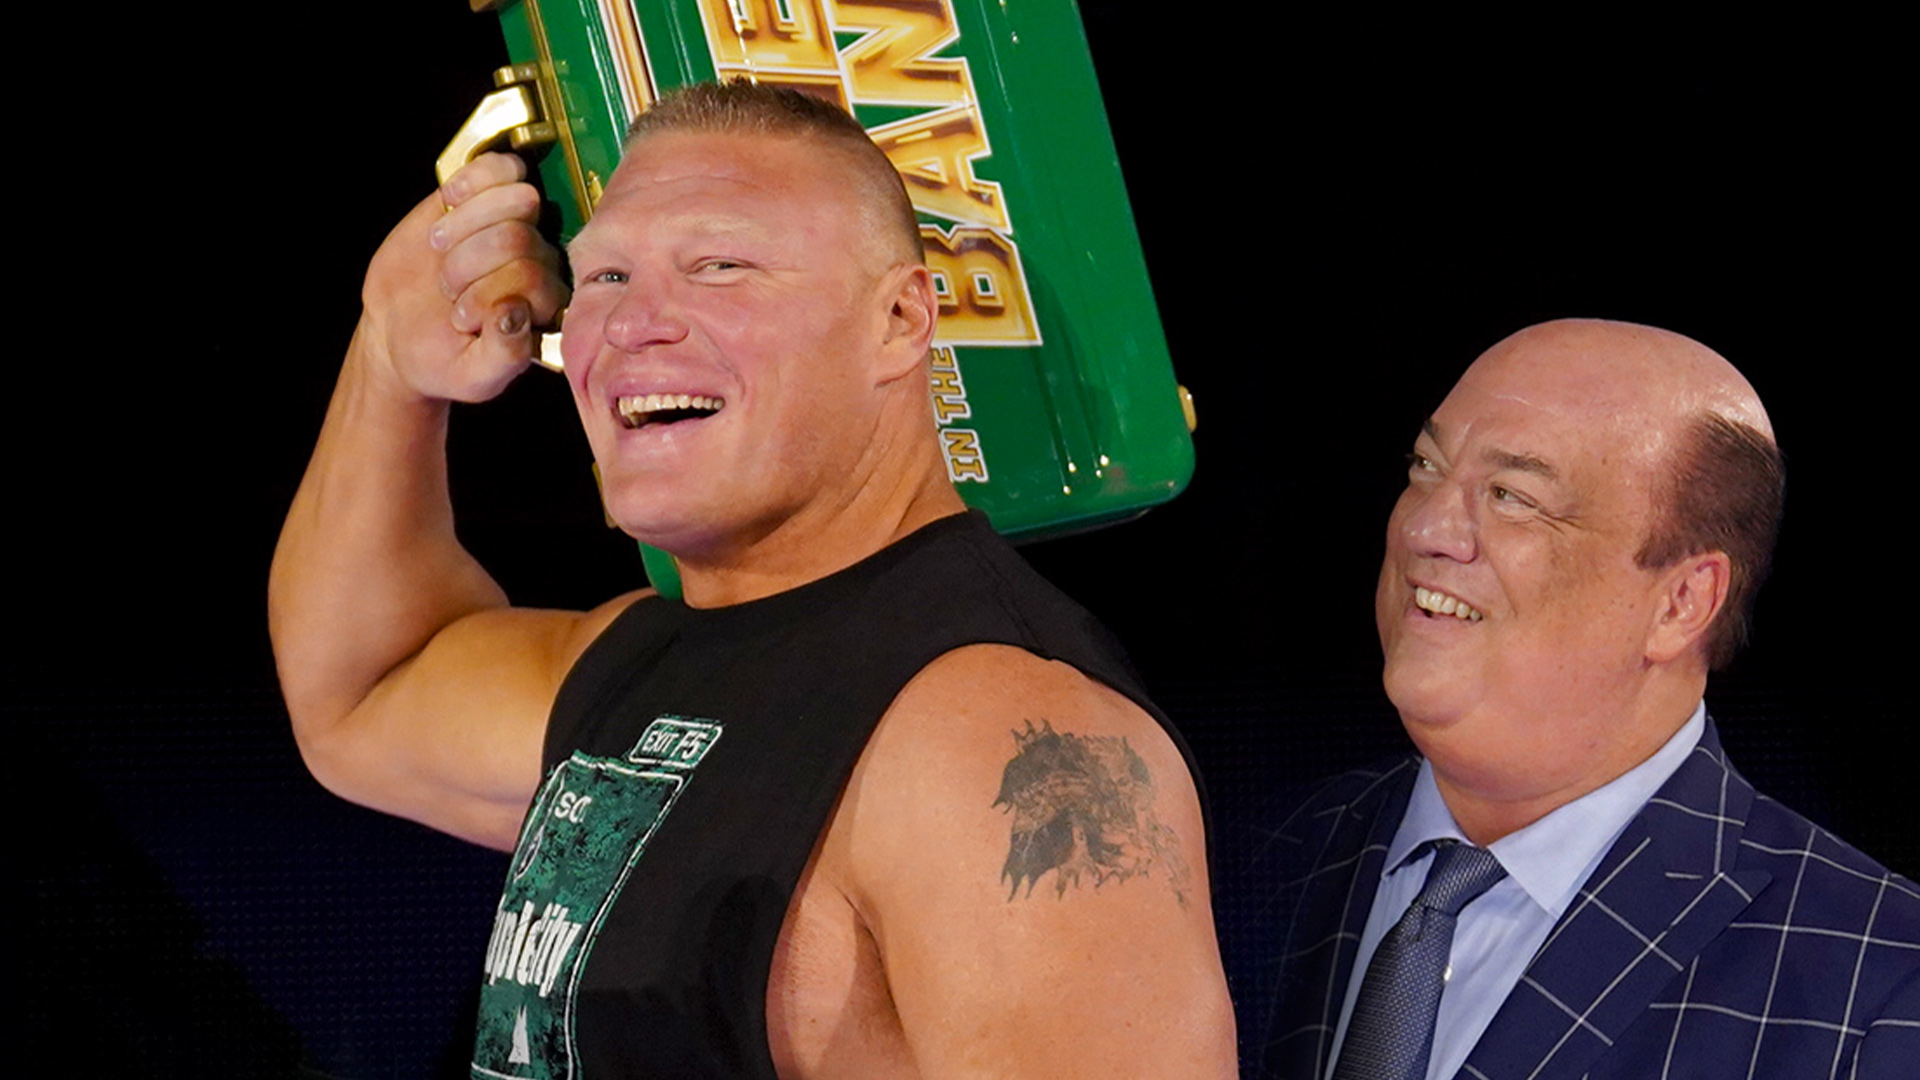 Brock Lesnar WWE RAW